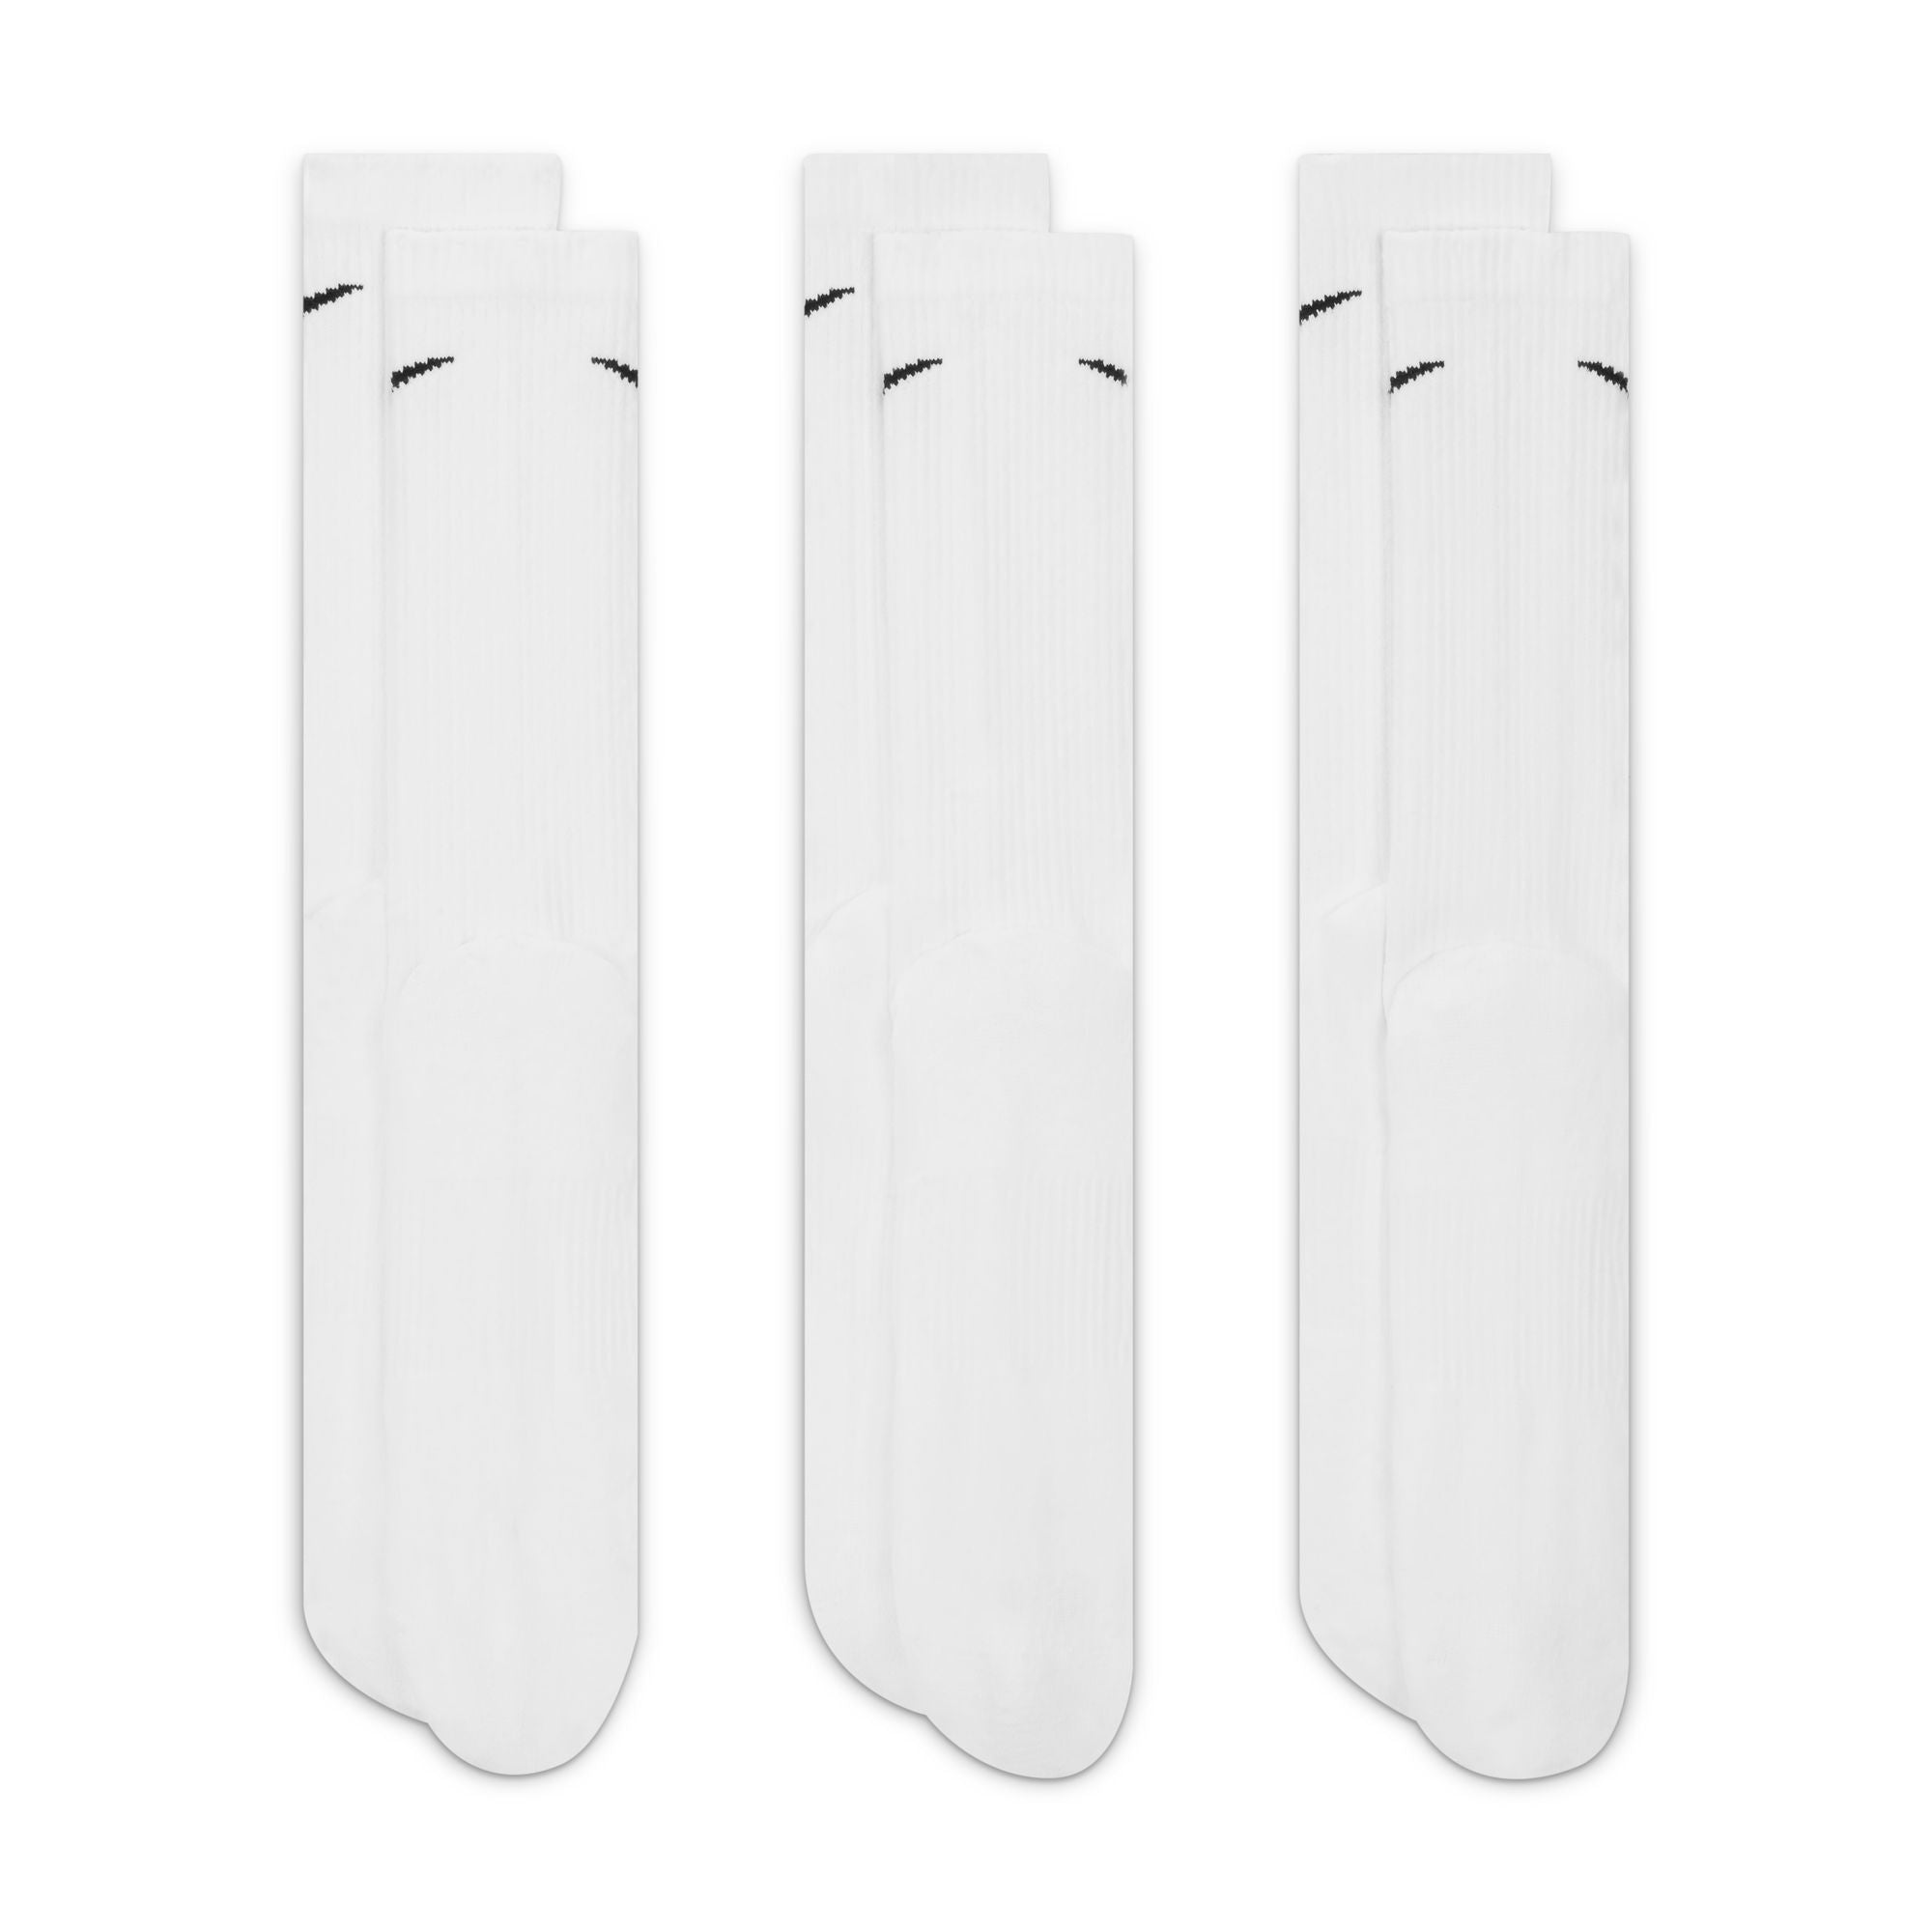 White/Black Cushioned Plus Nike SB Everyday Socks